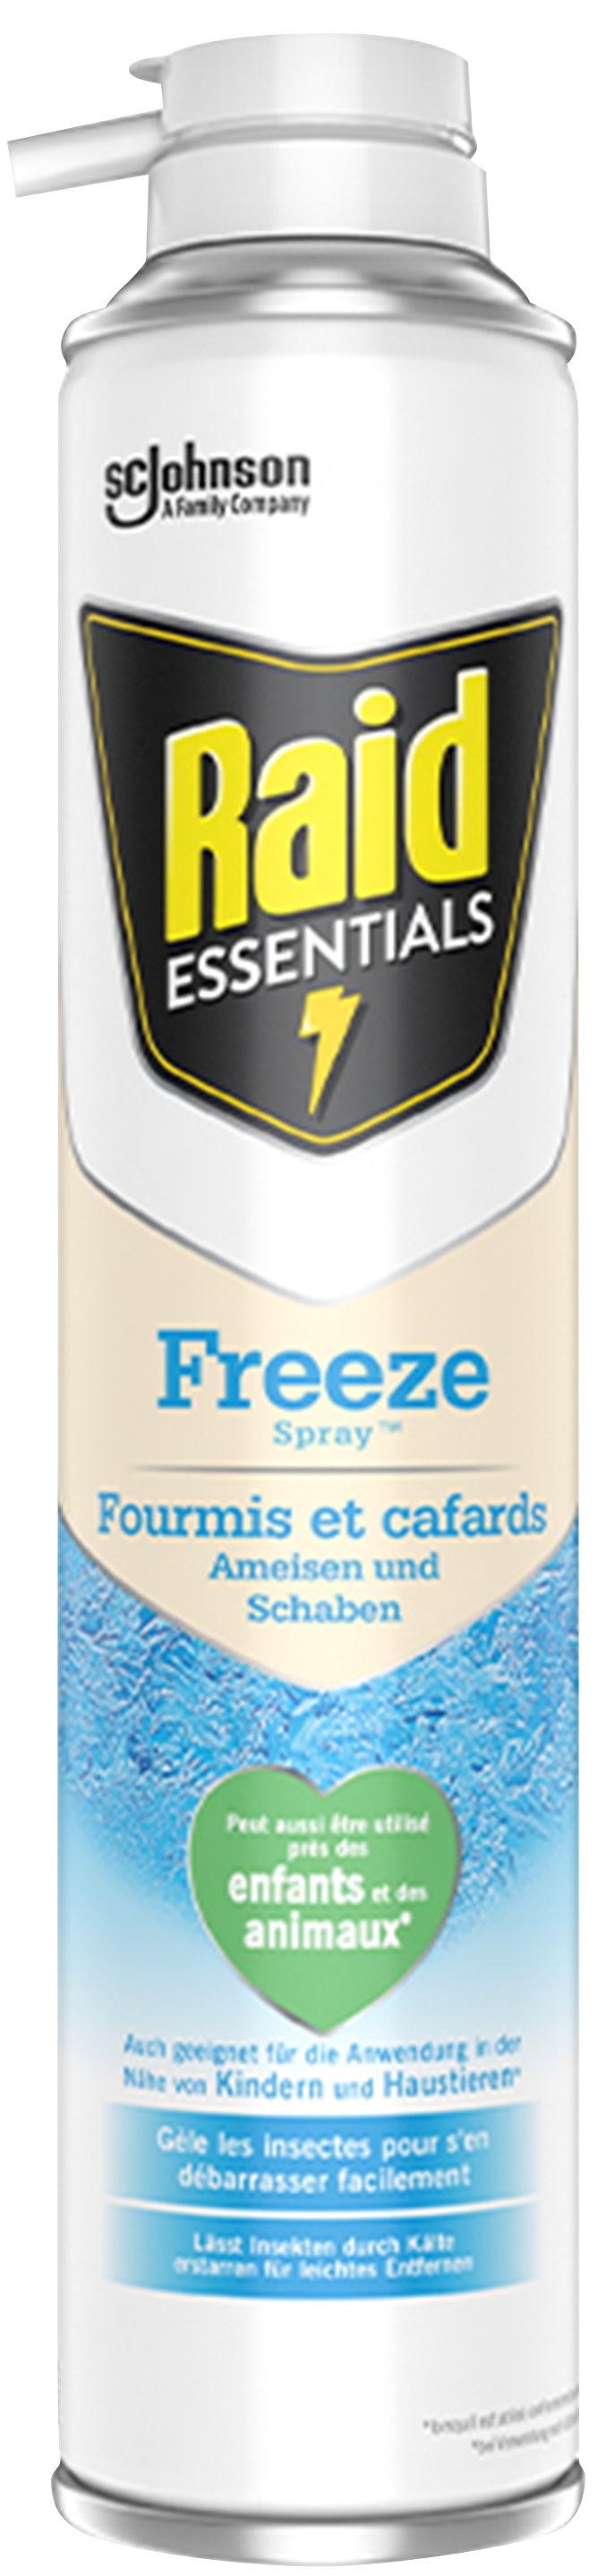 Raid Essentials Freeze Spray